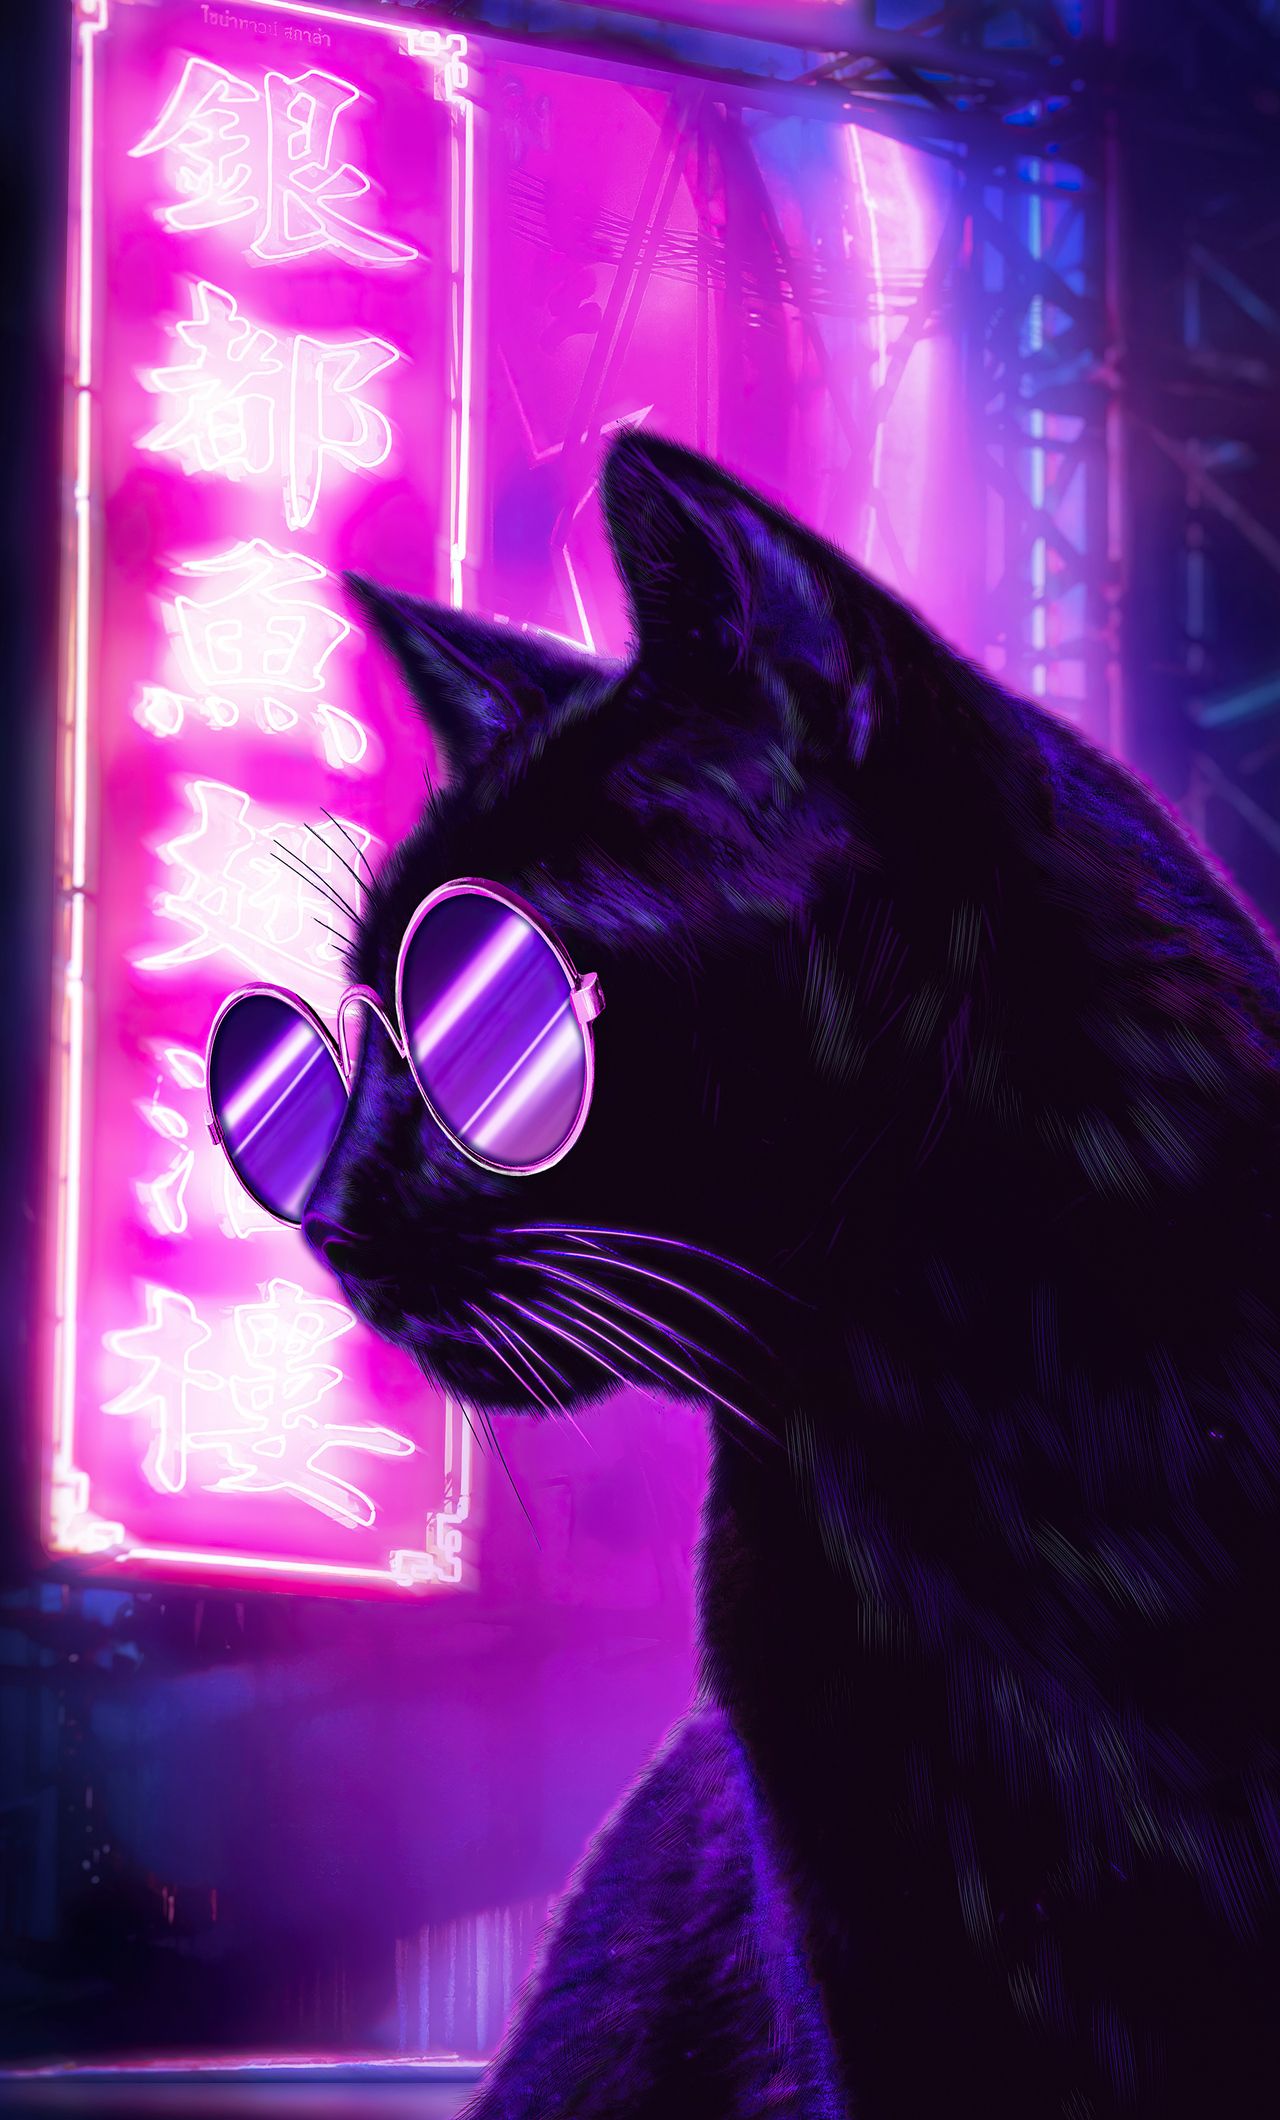 30000 Purple Cat Pictures  Download Free Images on Unsplash